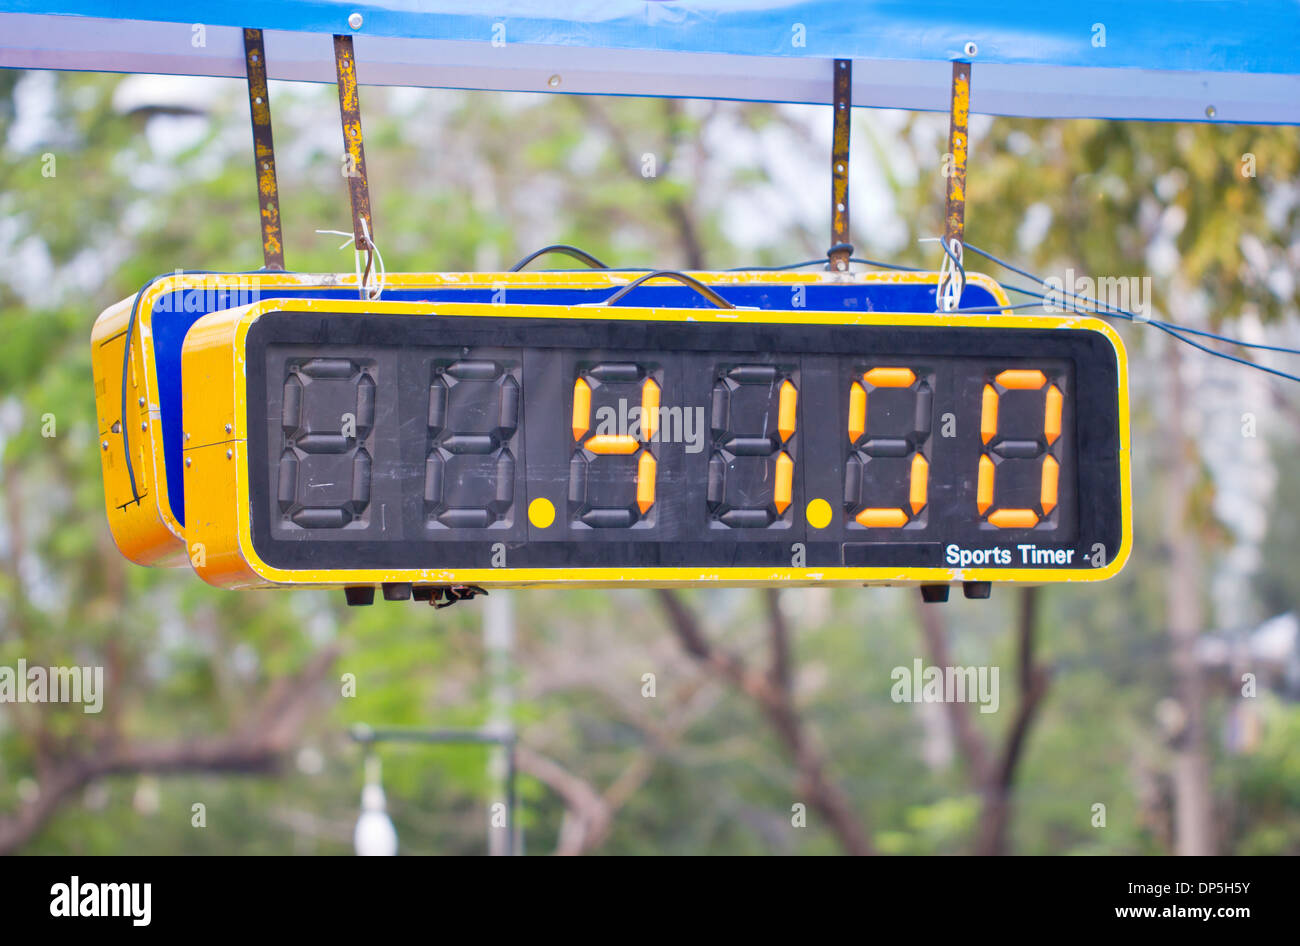 Athletics timing device. Stock Photo